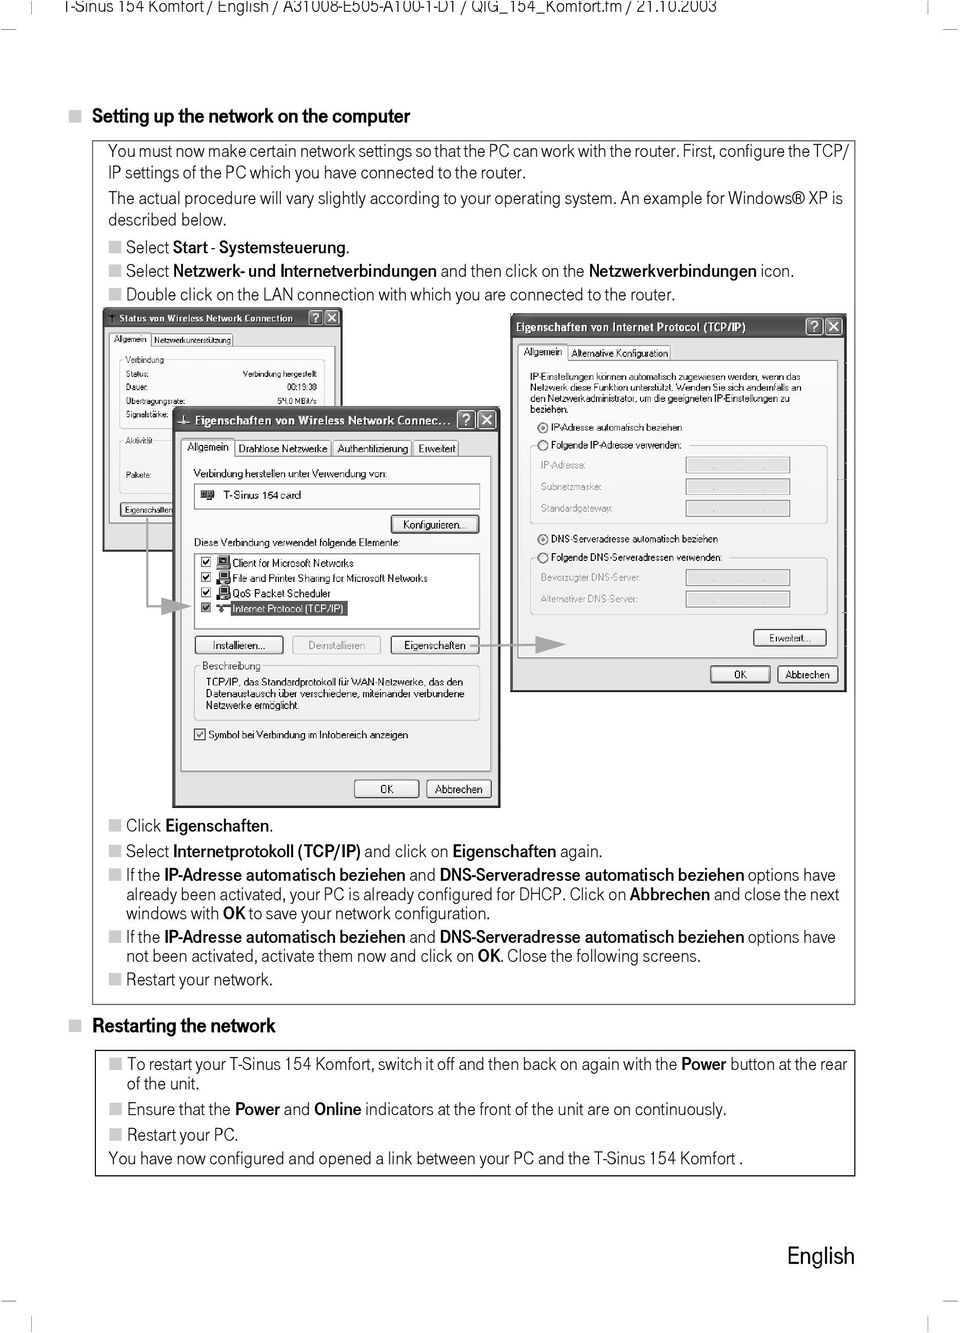 An example for Windows XP is described below. Select Start - Systemsteuerung. Select Netzwerk- und Internetverbindungen and then click on the Netzwerkverbindungen icon.